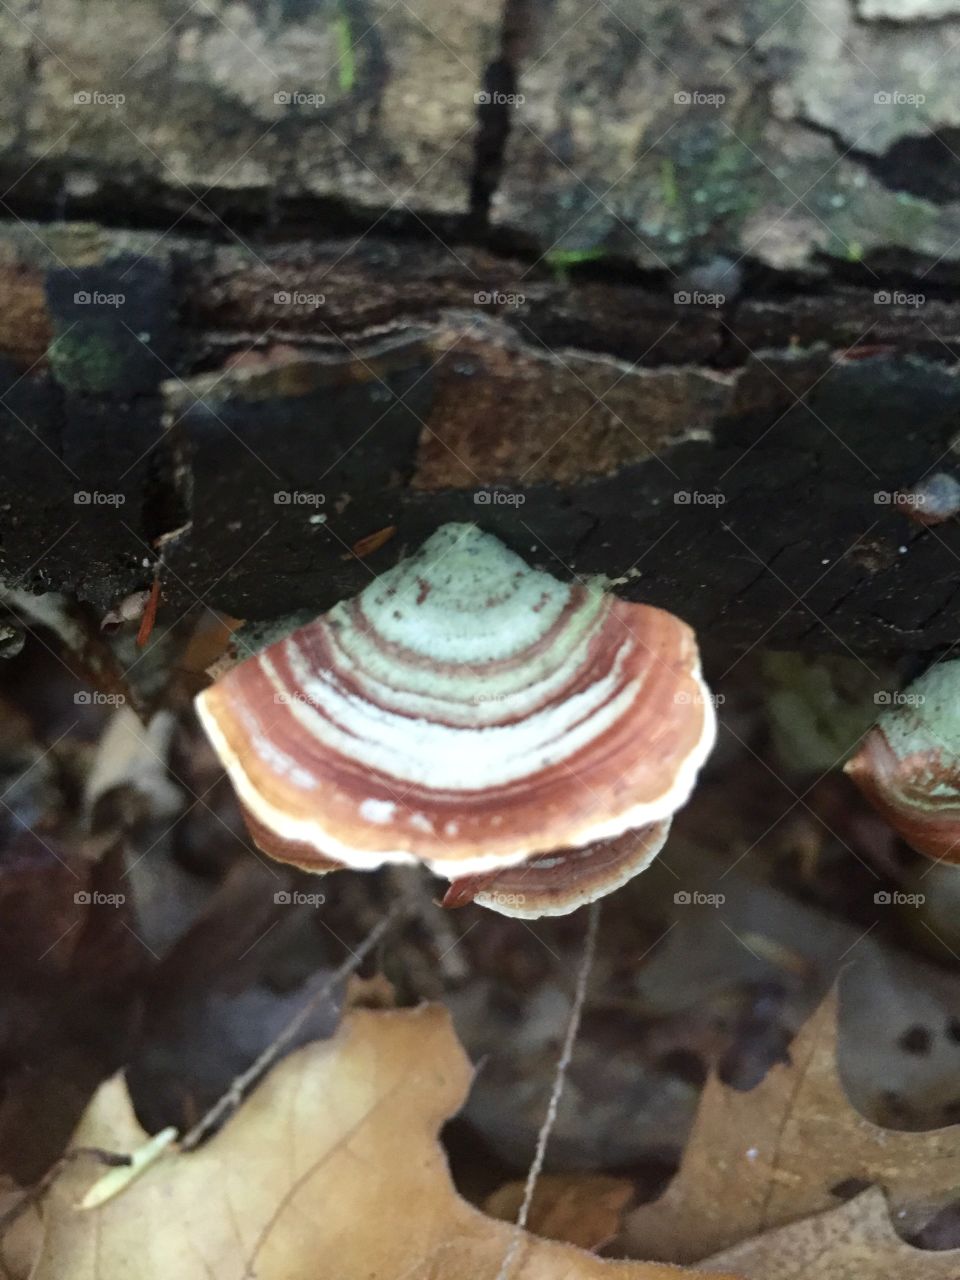 Pretty fungus